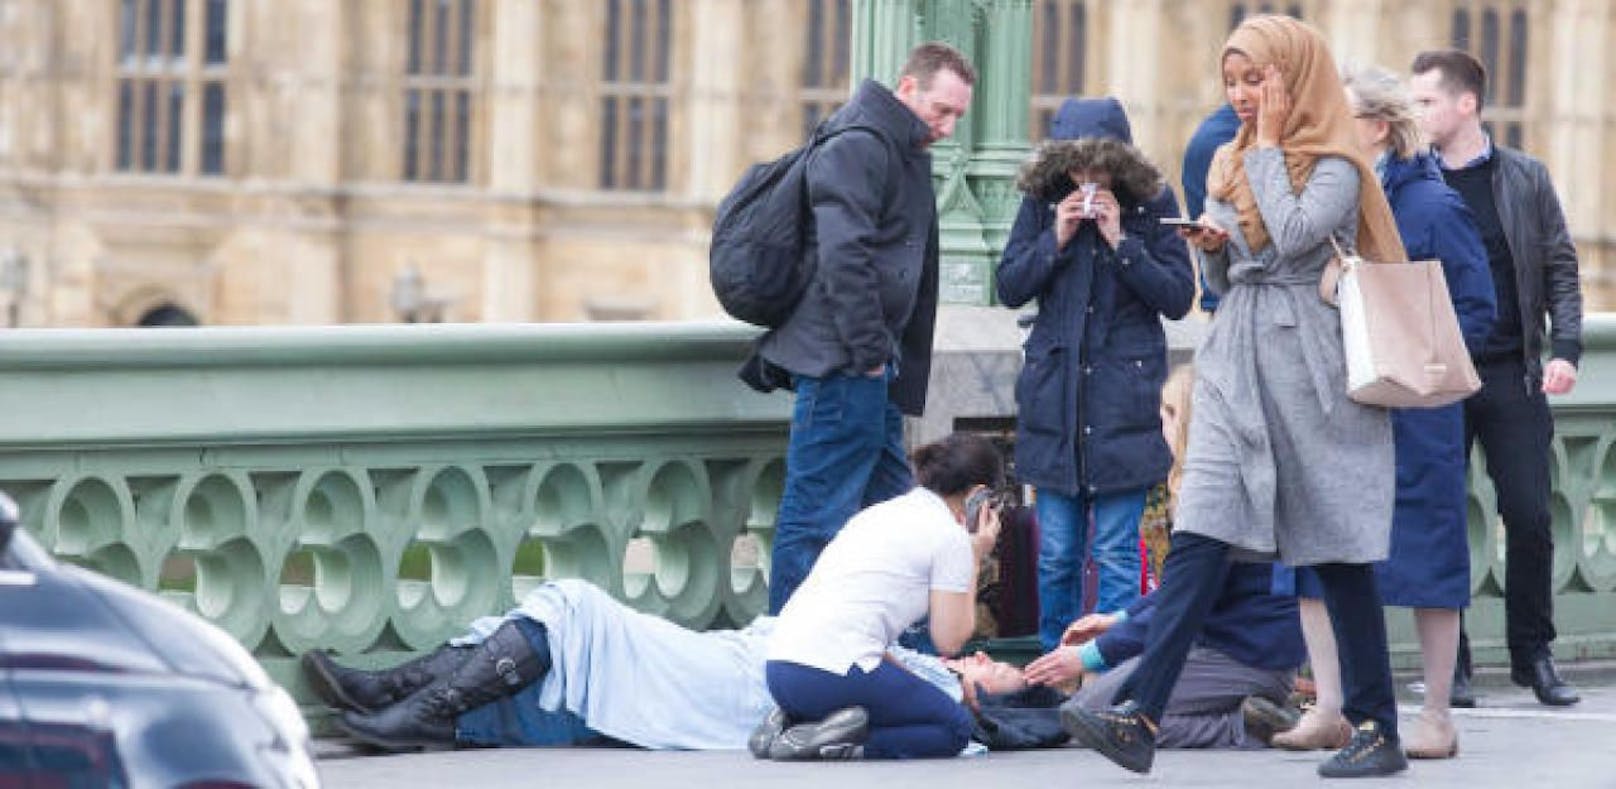 Die Szene kurz nach dem Anschlag bei der Westminster-Brücke.